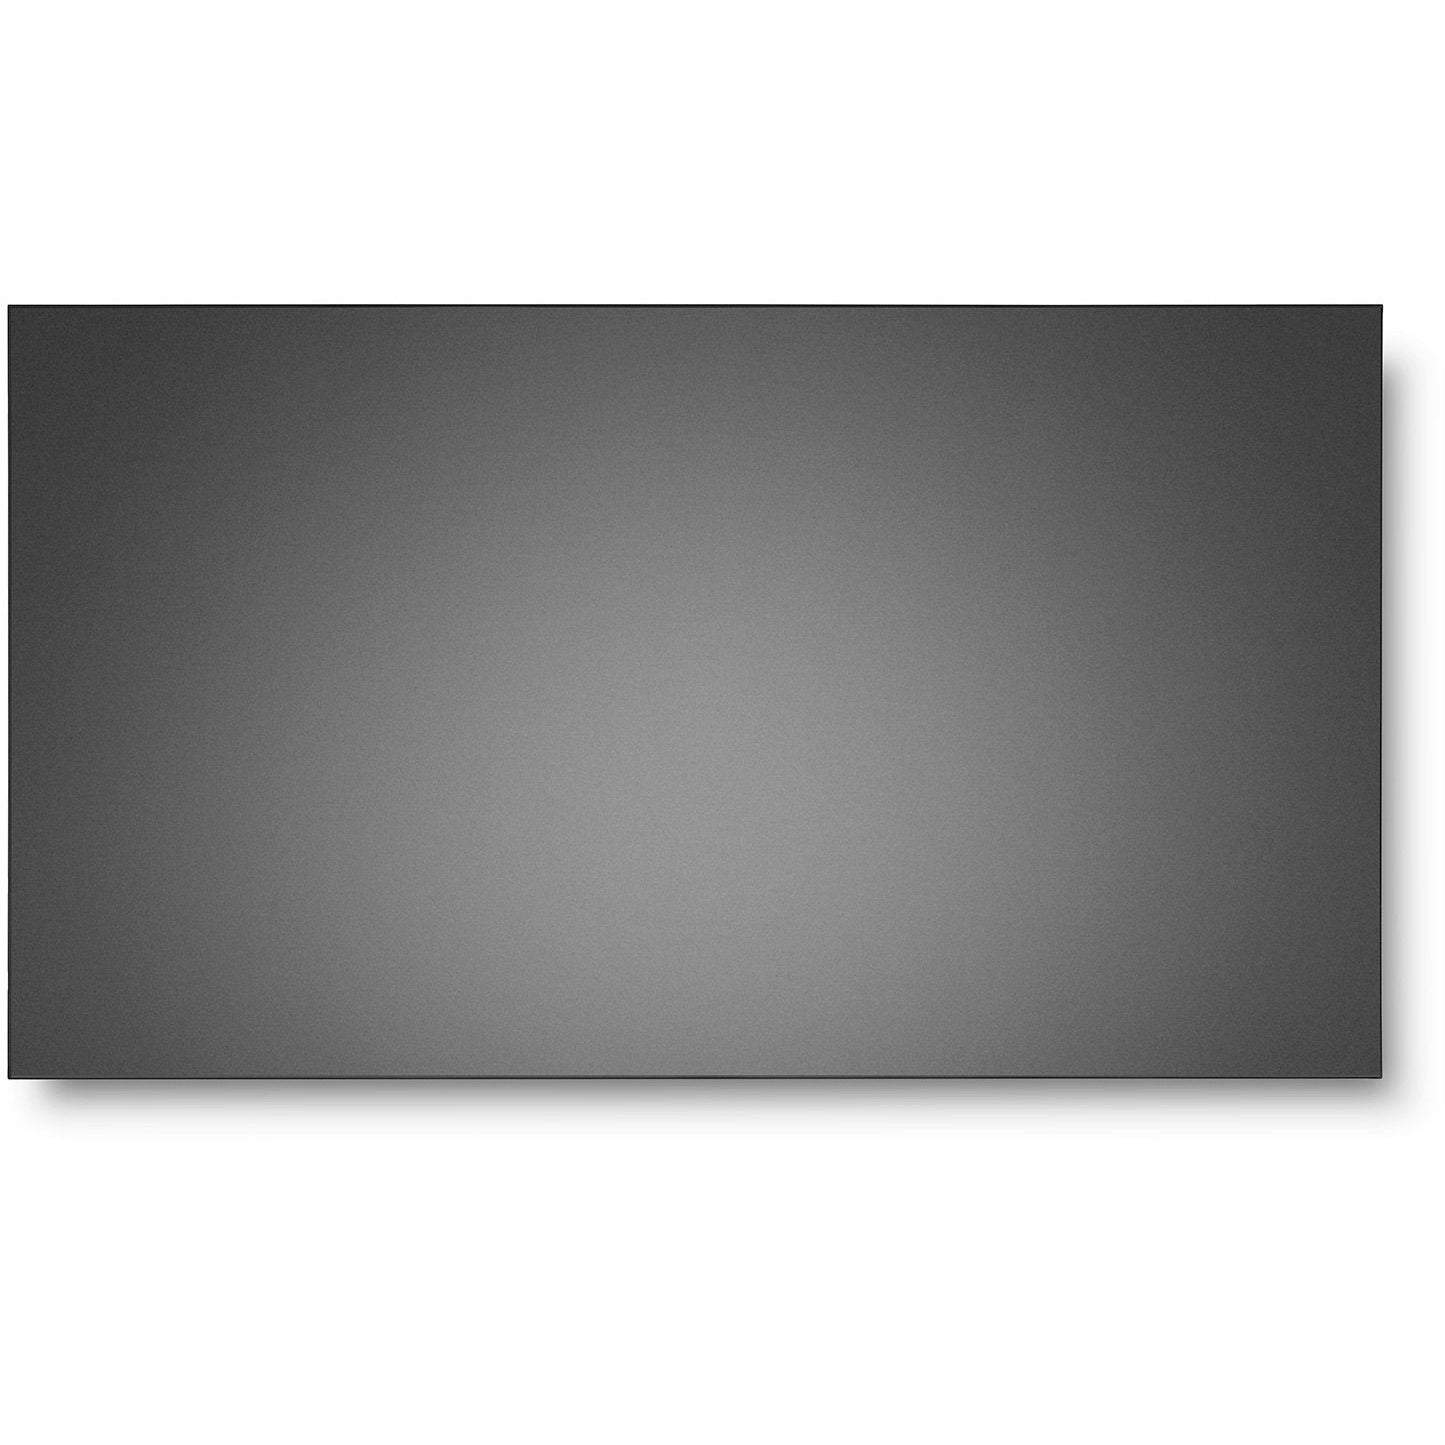 Dim Gray NEC MultiSync® UN552 LCD 55" Video Wall Display